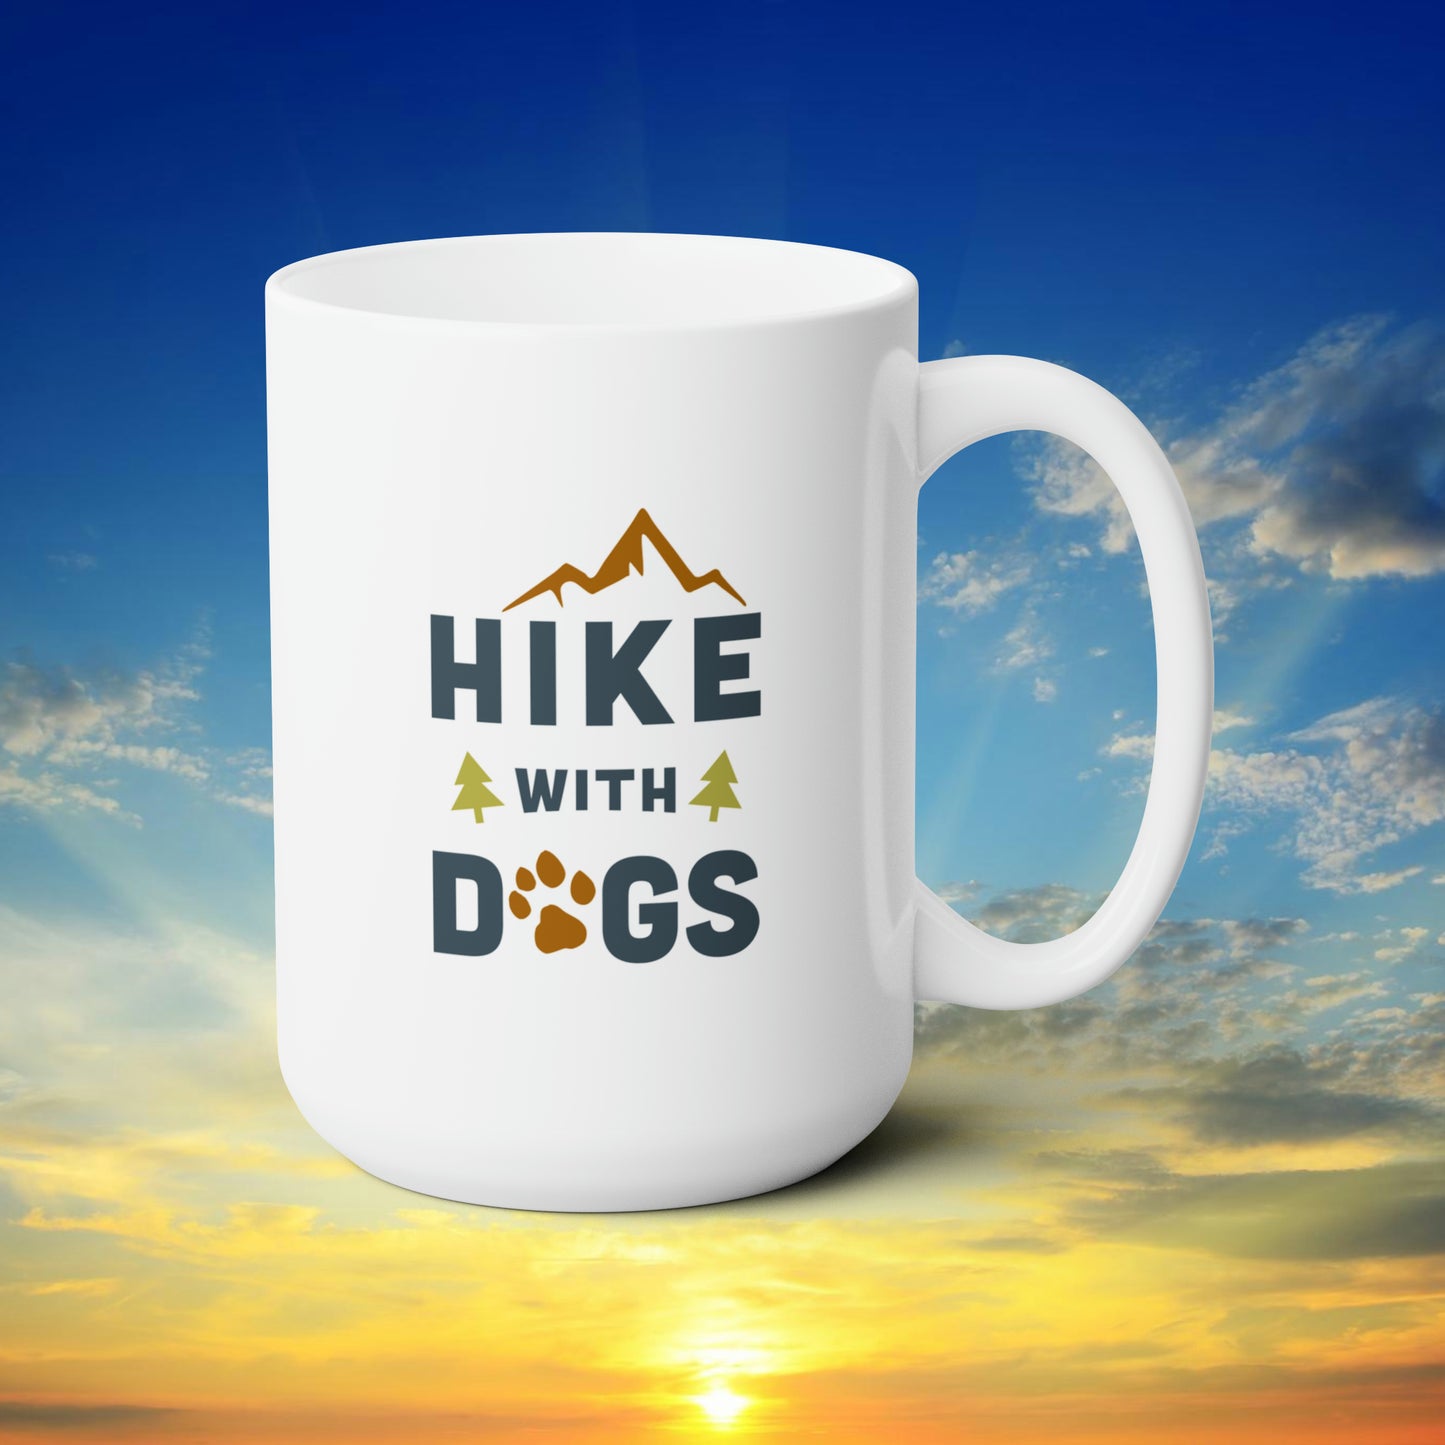 Hike with Dogs Ceramic Mug 15oz